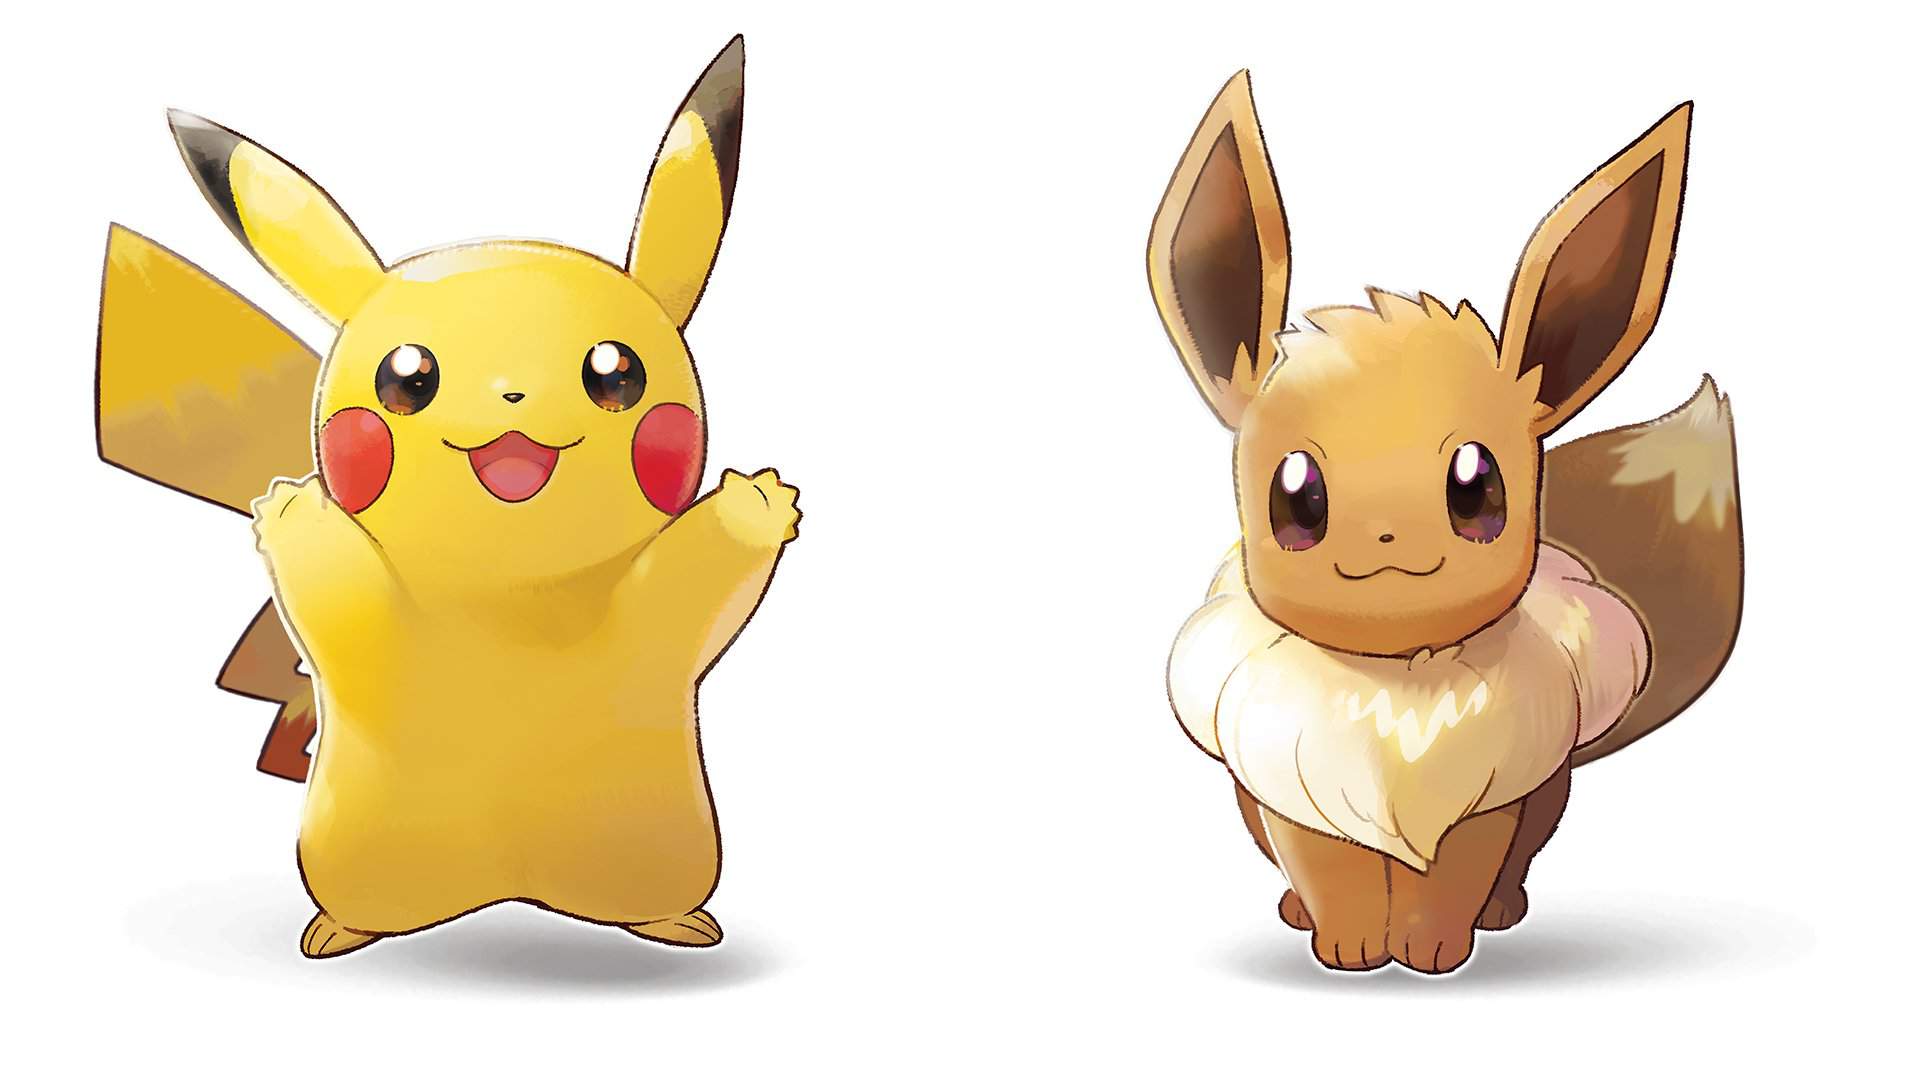 team to Pokémon let's go pikachu Pokémon let's go eevee | Pokémon Amino